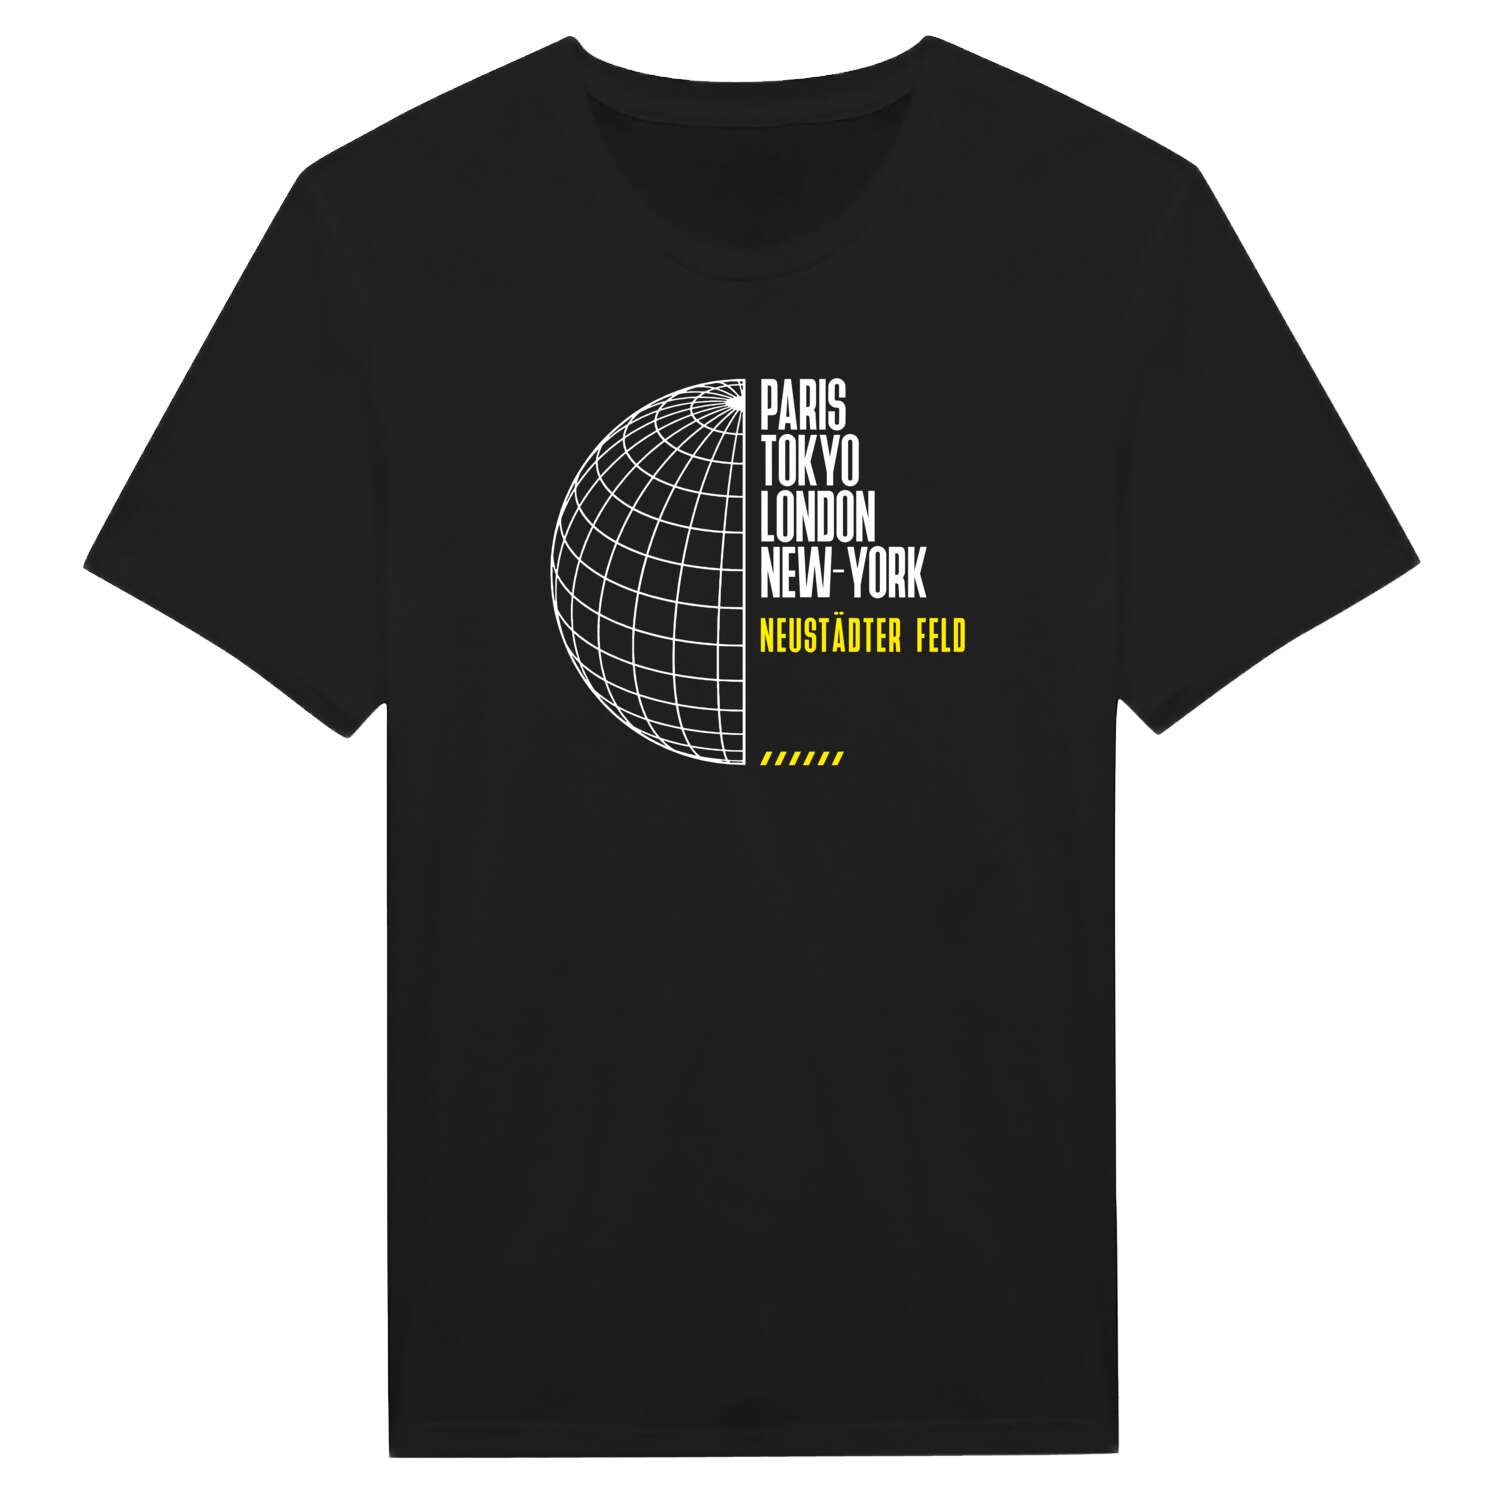 Neustädter Feld T-Shirt »Paris Tokyo London«